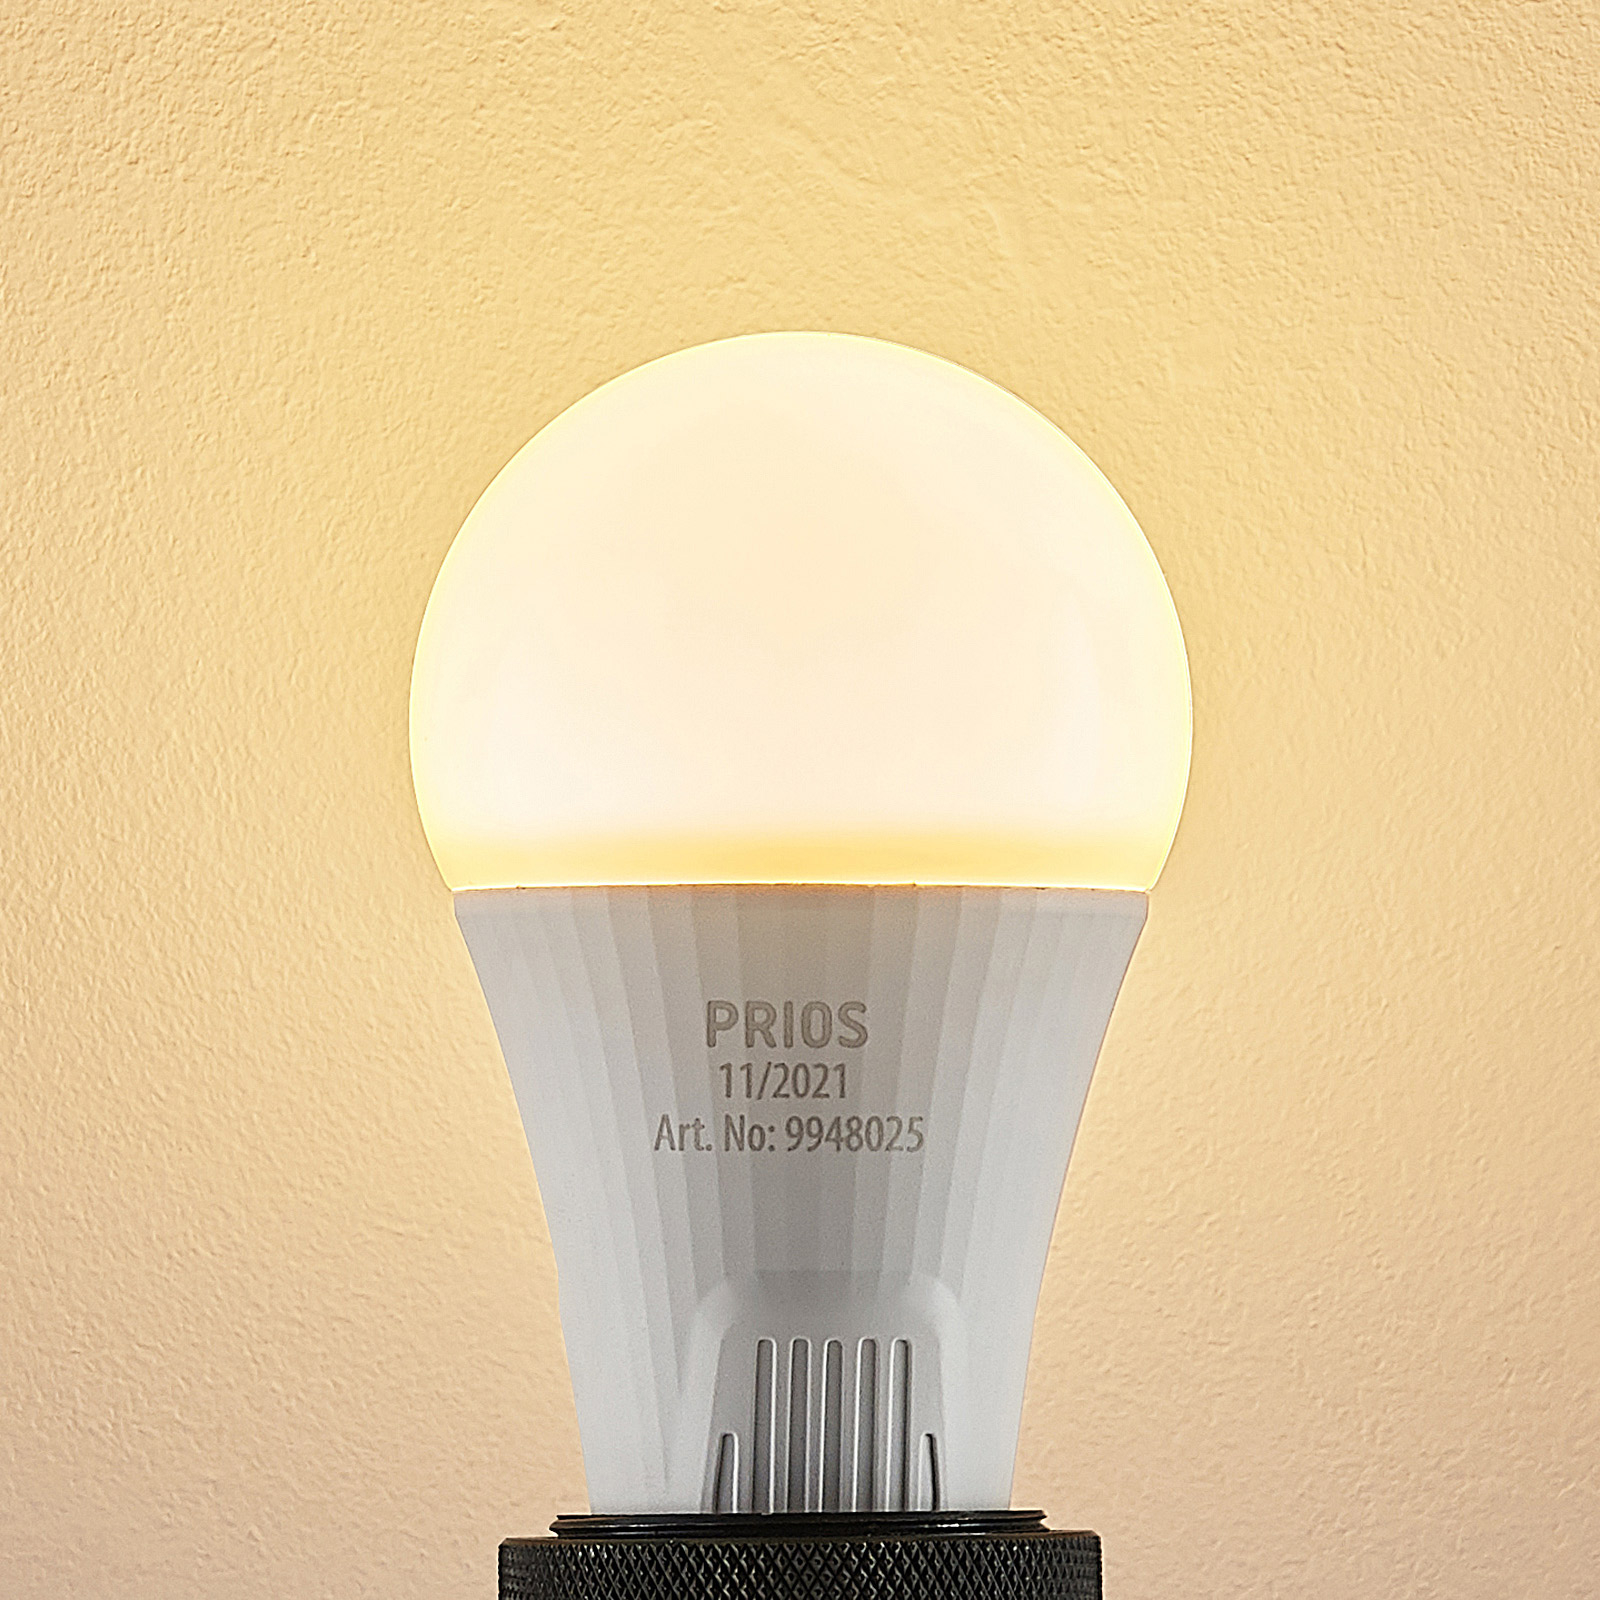 LED-Lampe E27 A65 15W weiß 2.700K